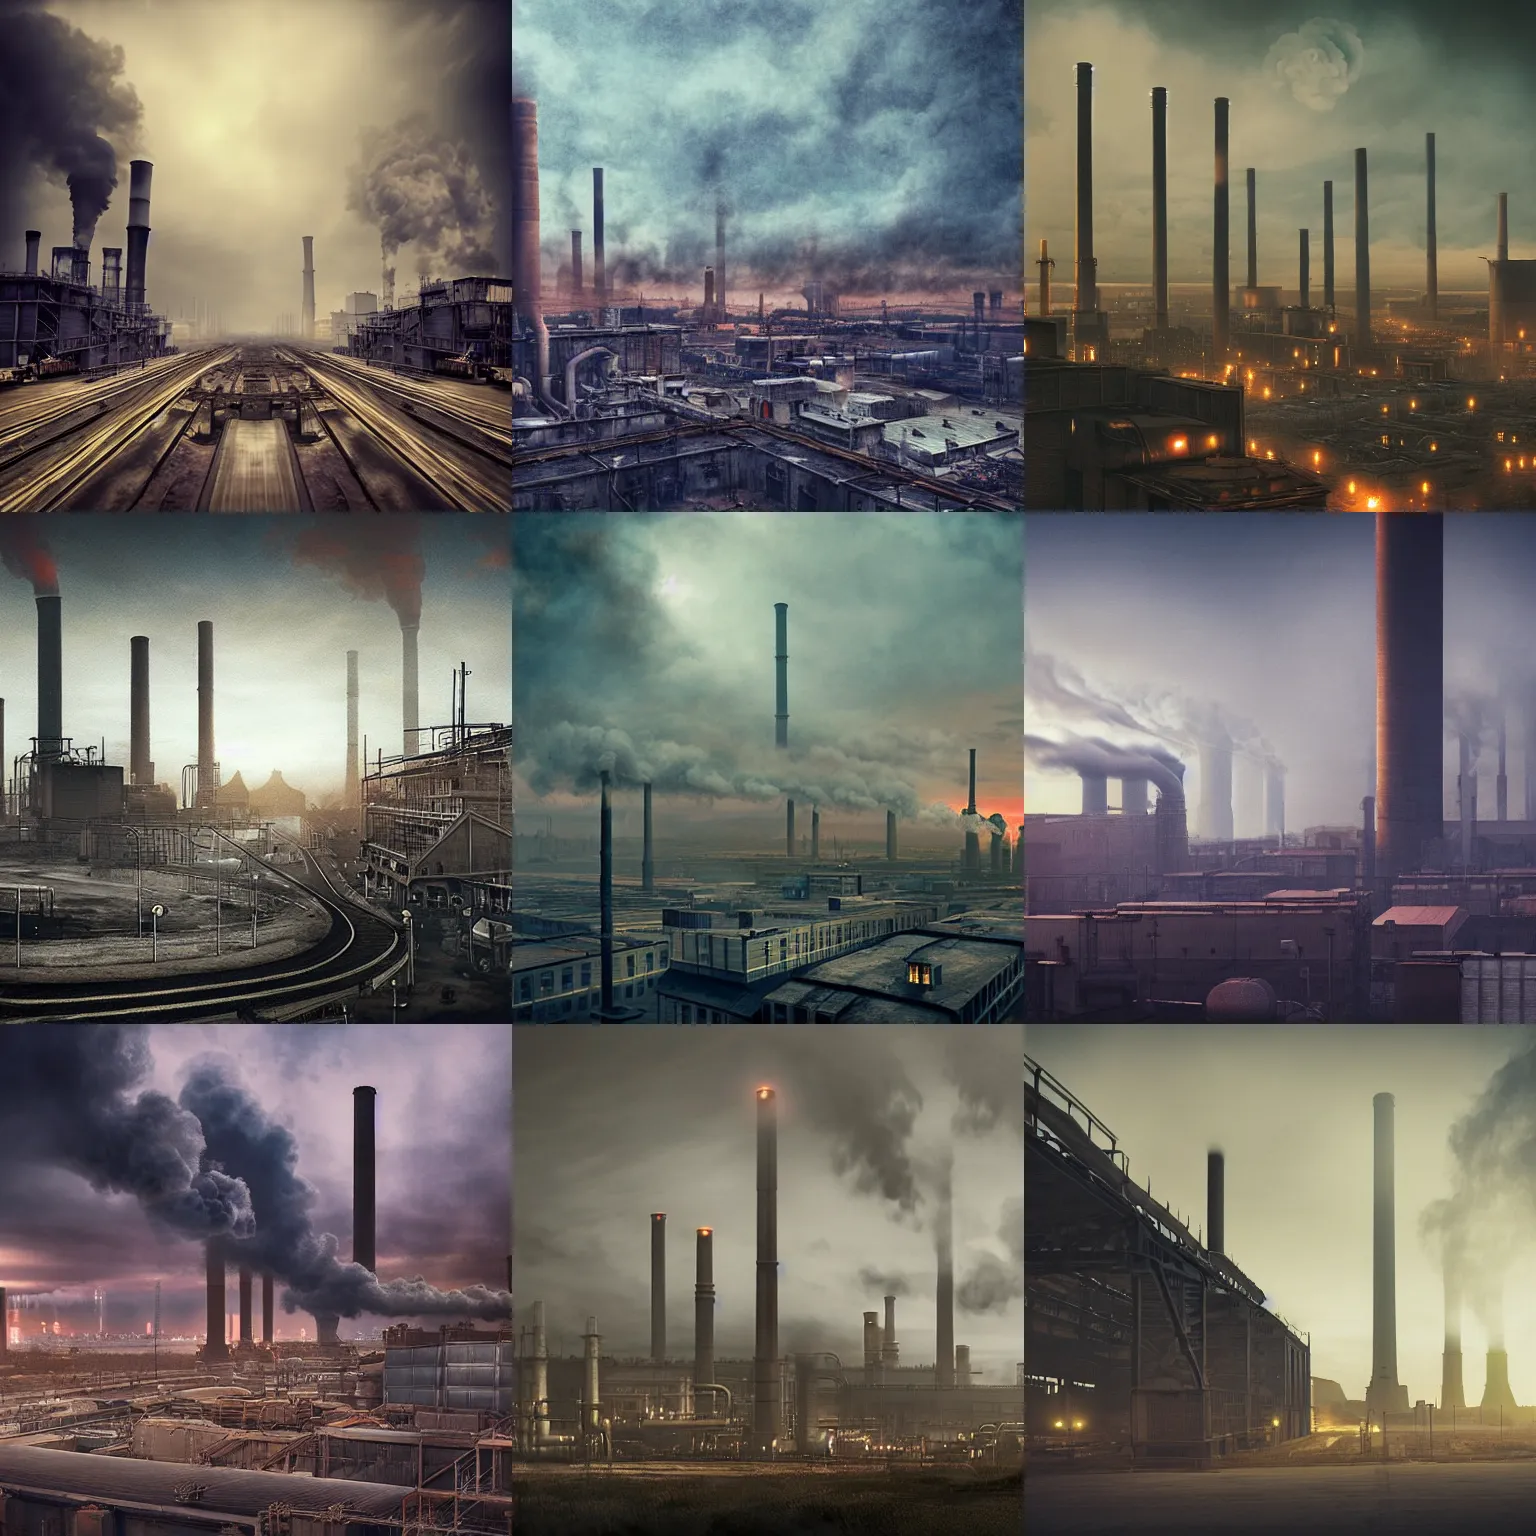 Prompt: endless industrial megafactory complex, smokestacks, steampunk, smoke, night, gloomy, matte painting